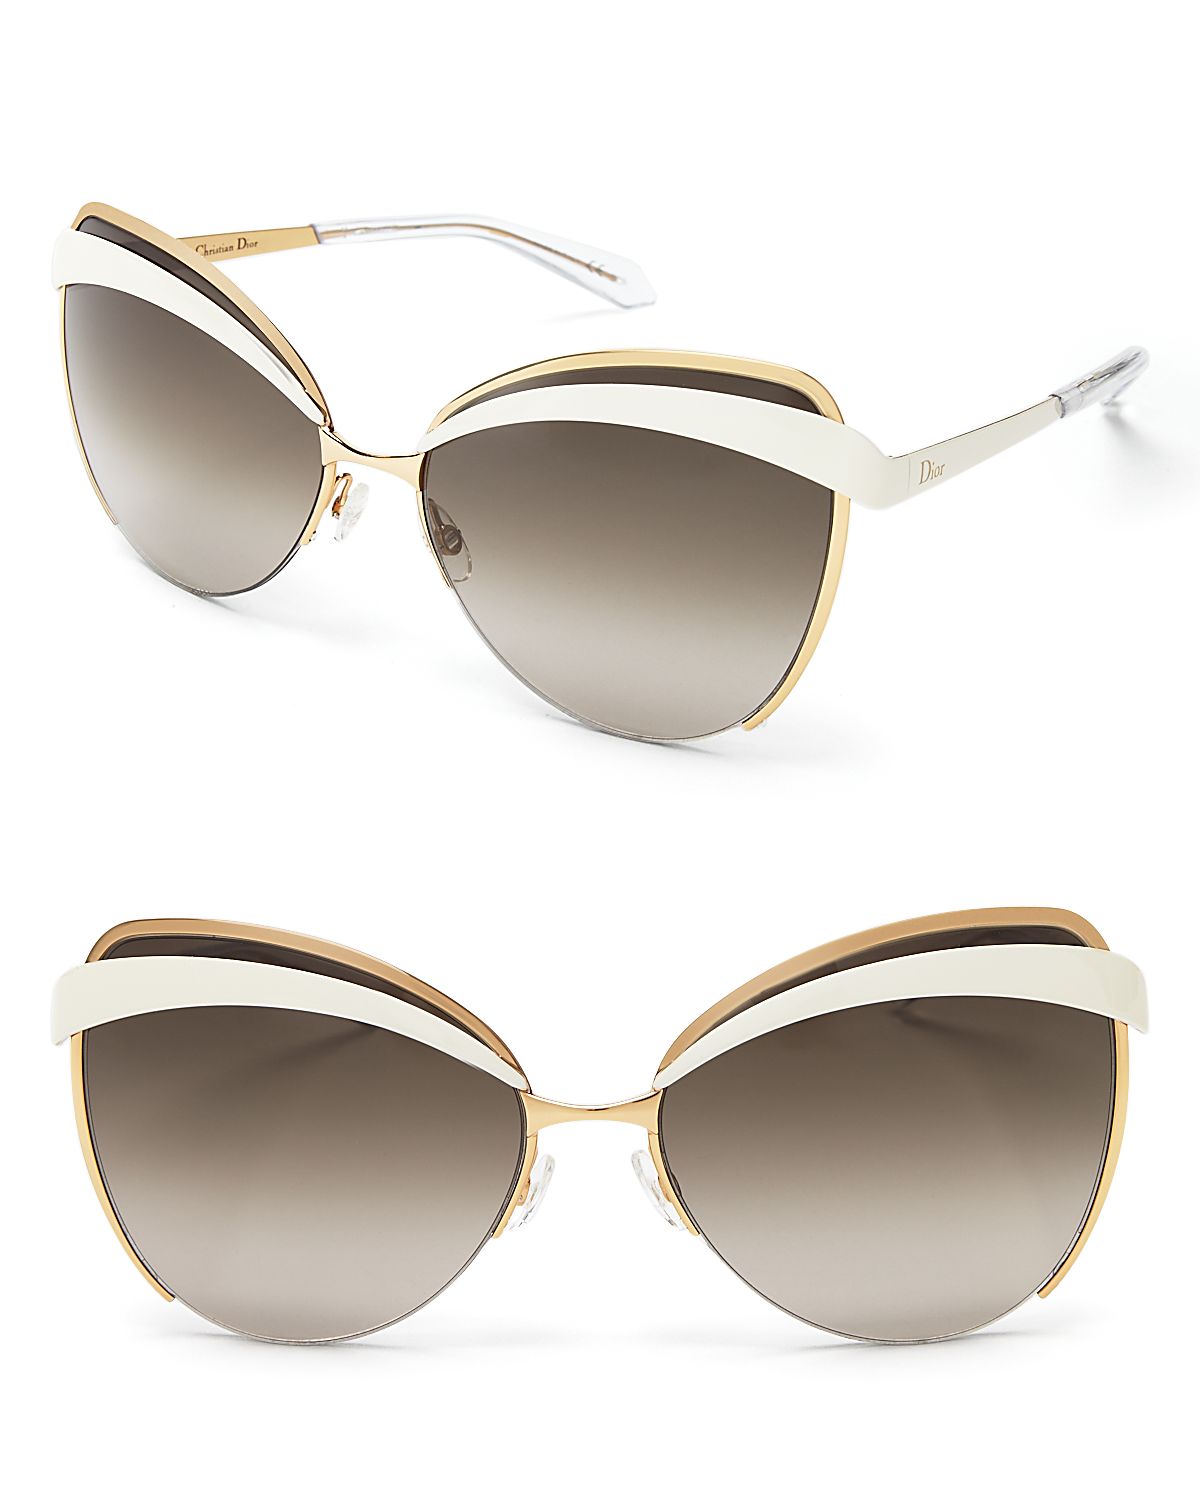 Dior Eyes Cat Eye Sunglasses in Rose Gold/Ivory (Metallic) - Lyst